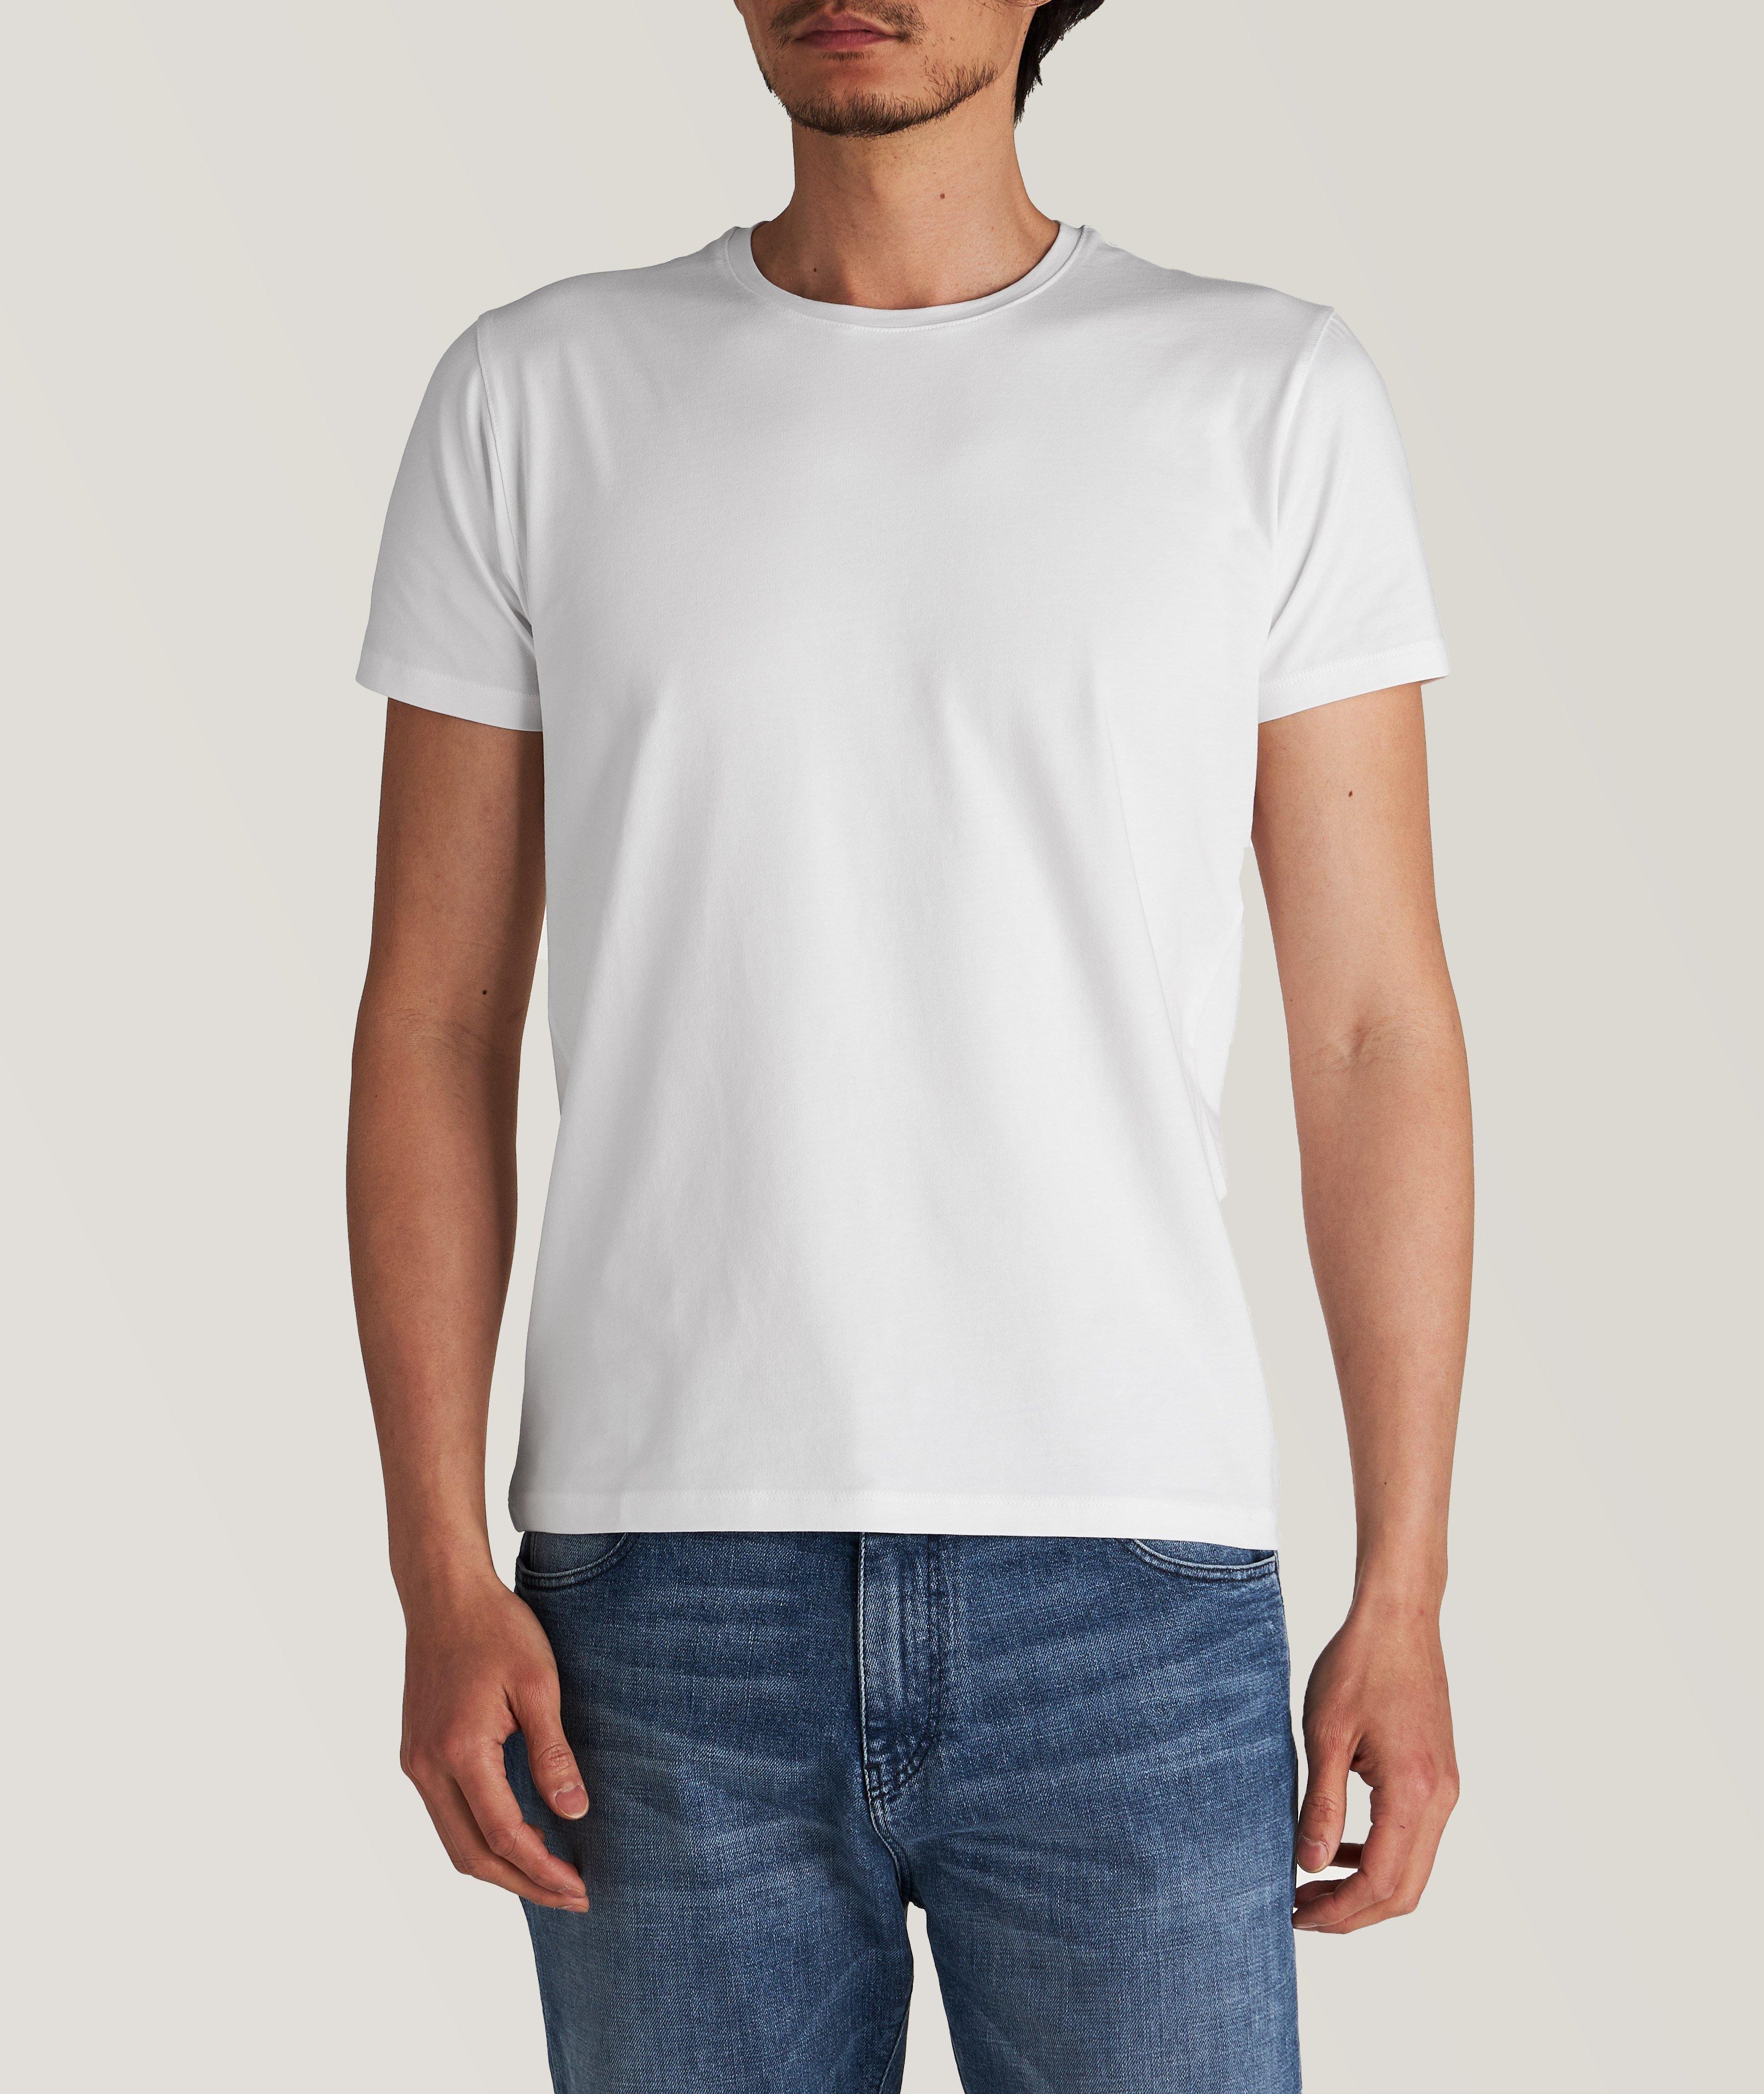 Pima Stretch-Cotton Crewneck T-Shirt image 0